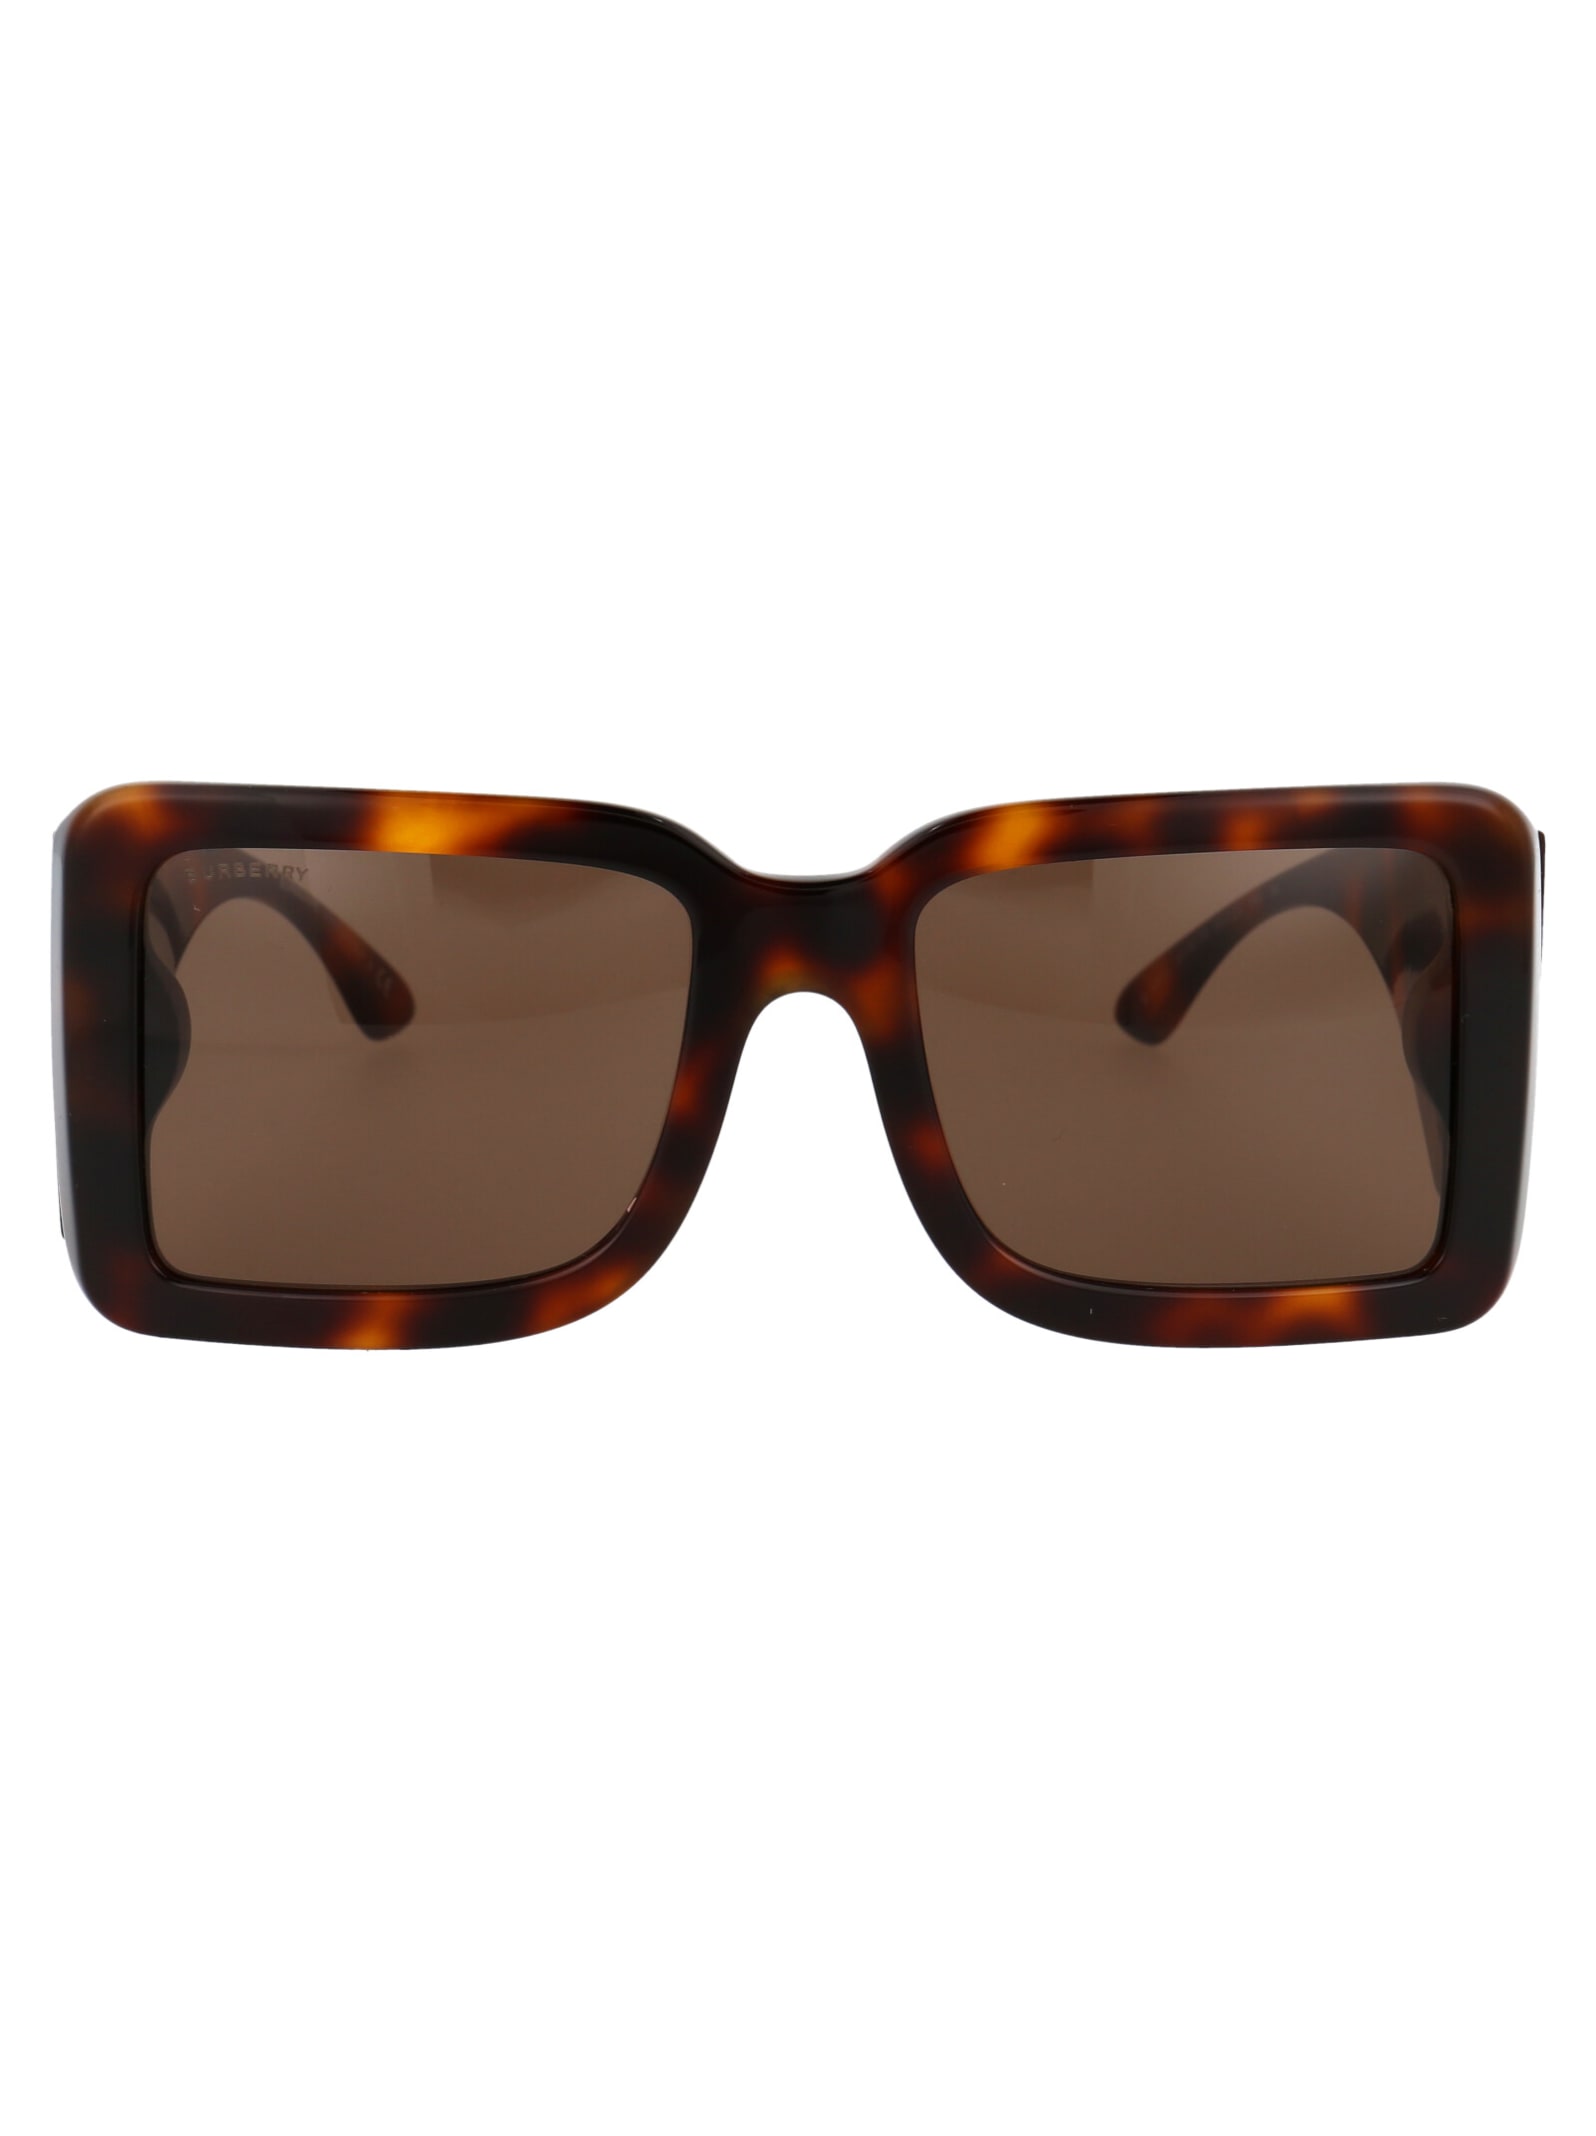 Burberry Eyewear Frith Sunglasses